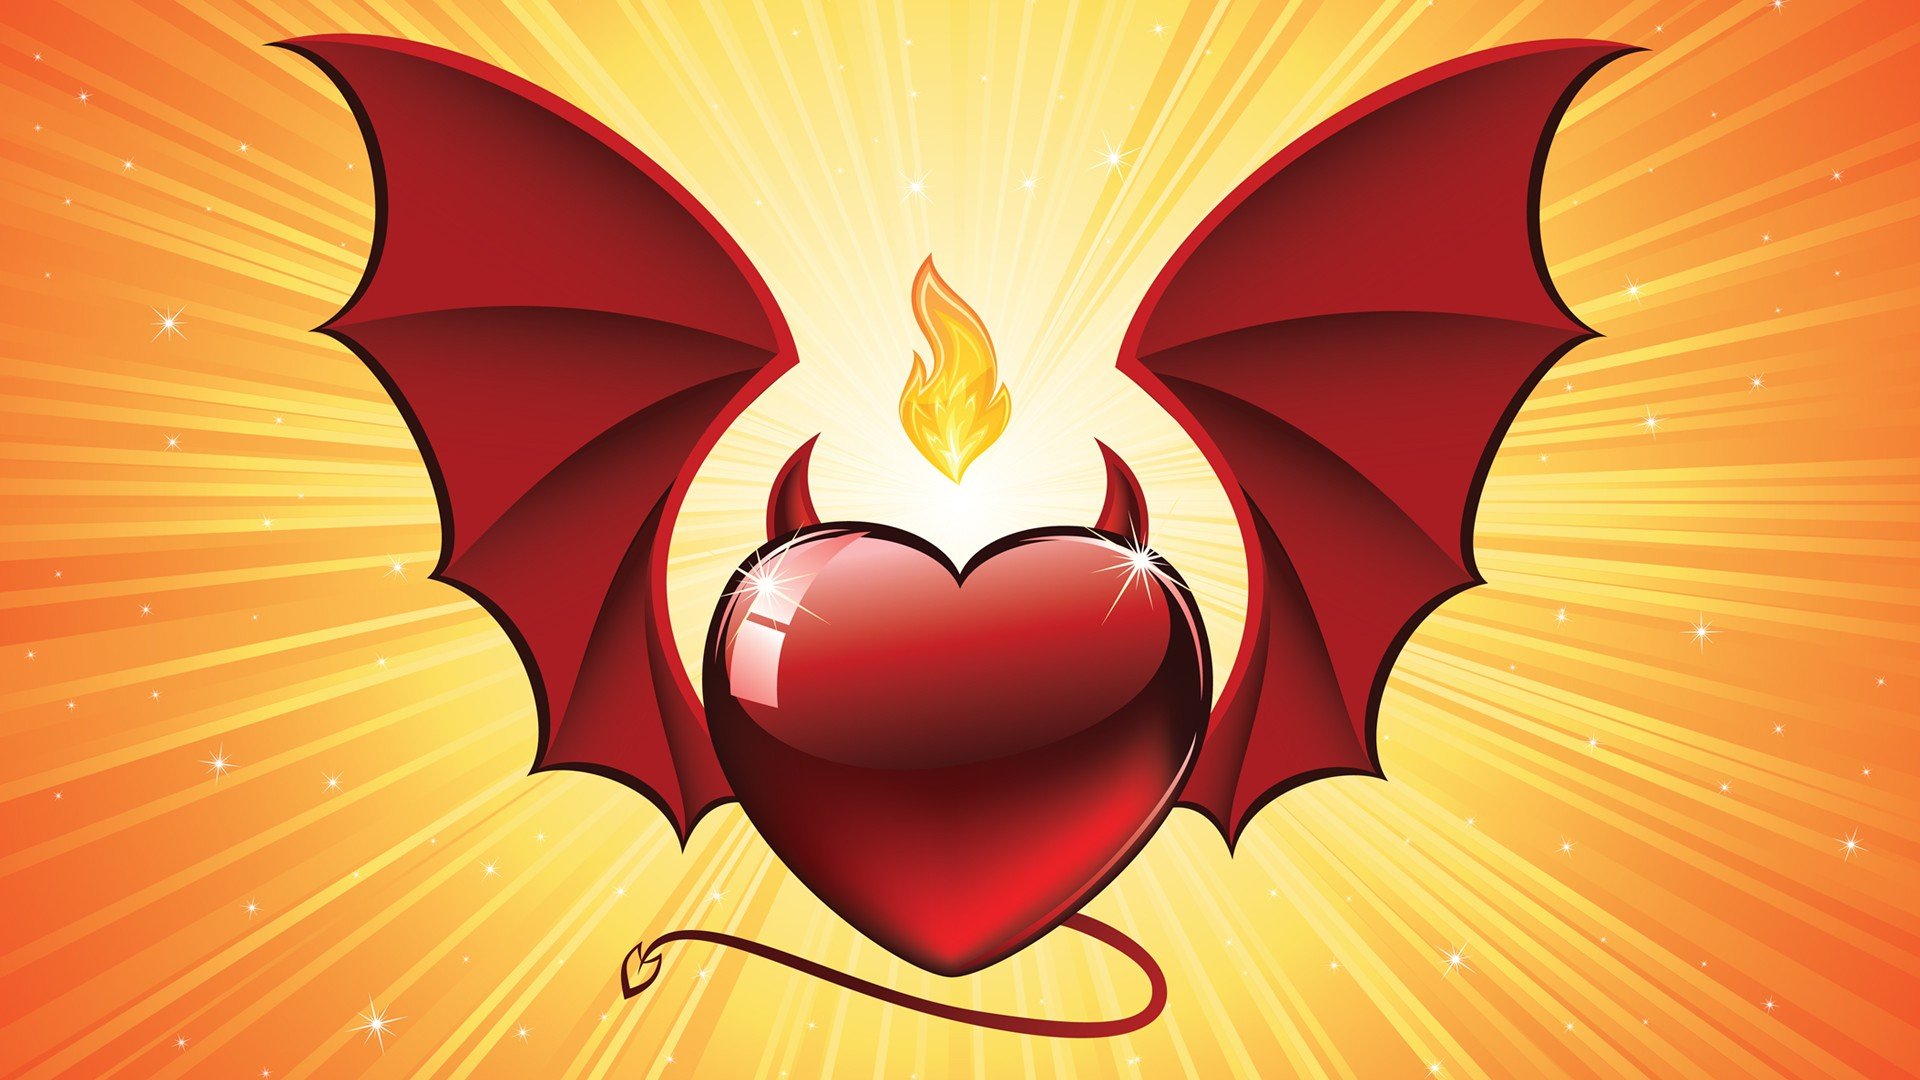 Tails wings devil Valentines Day digital art hearts illuminated vector art wallpaperx1080